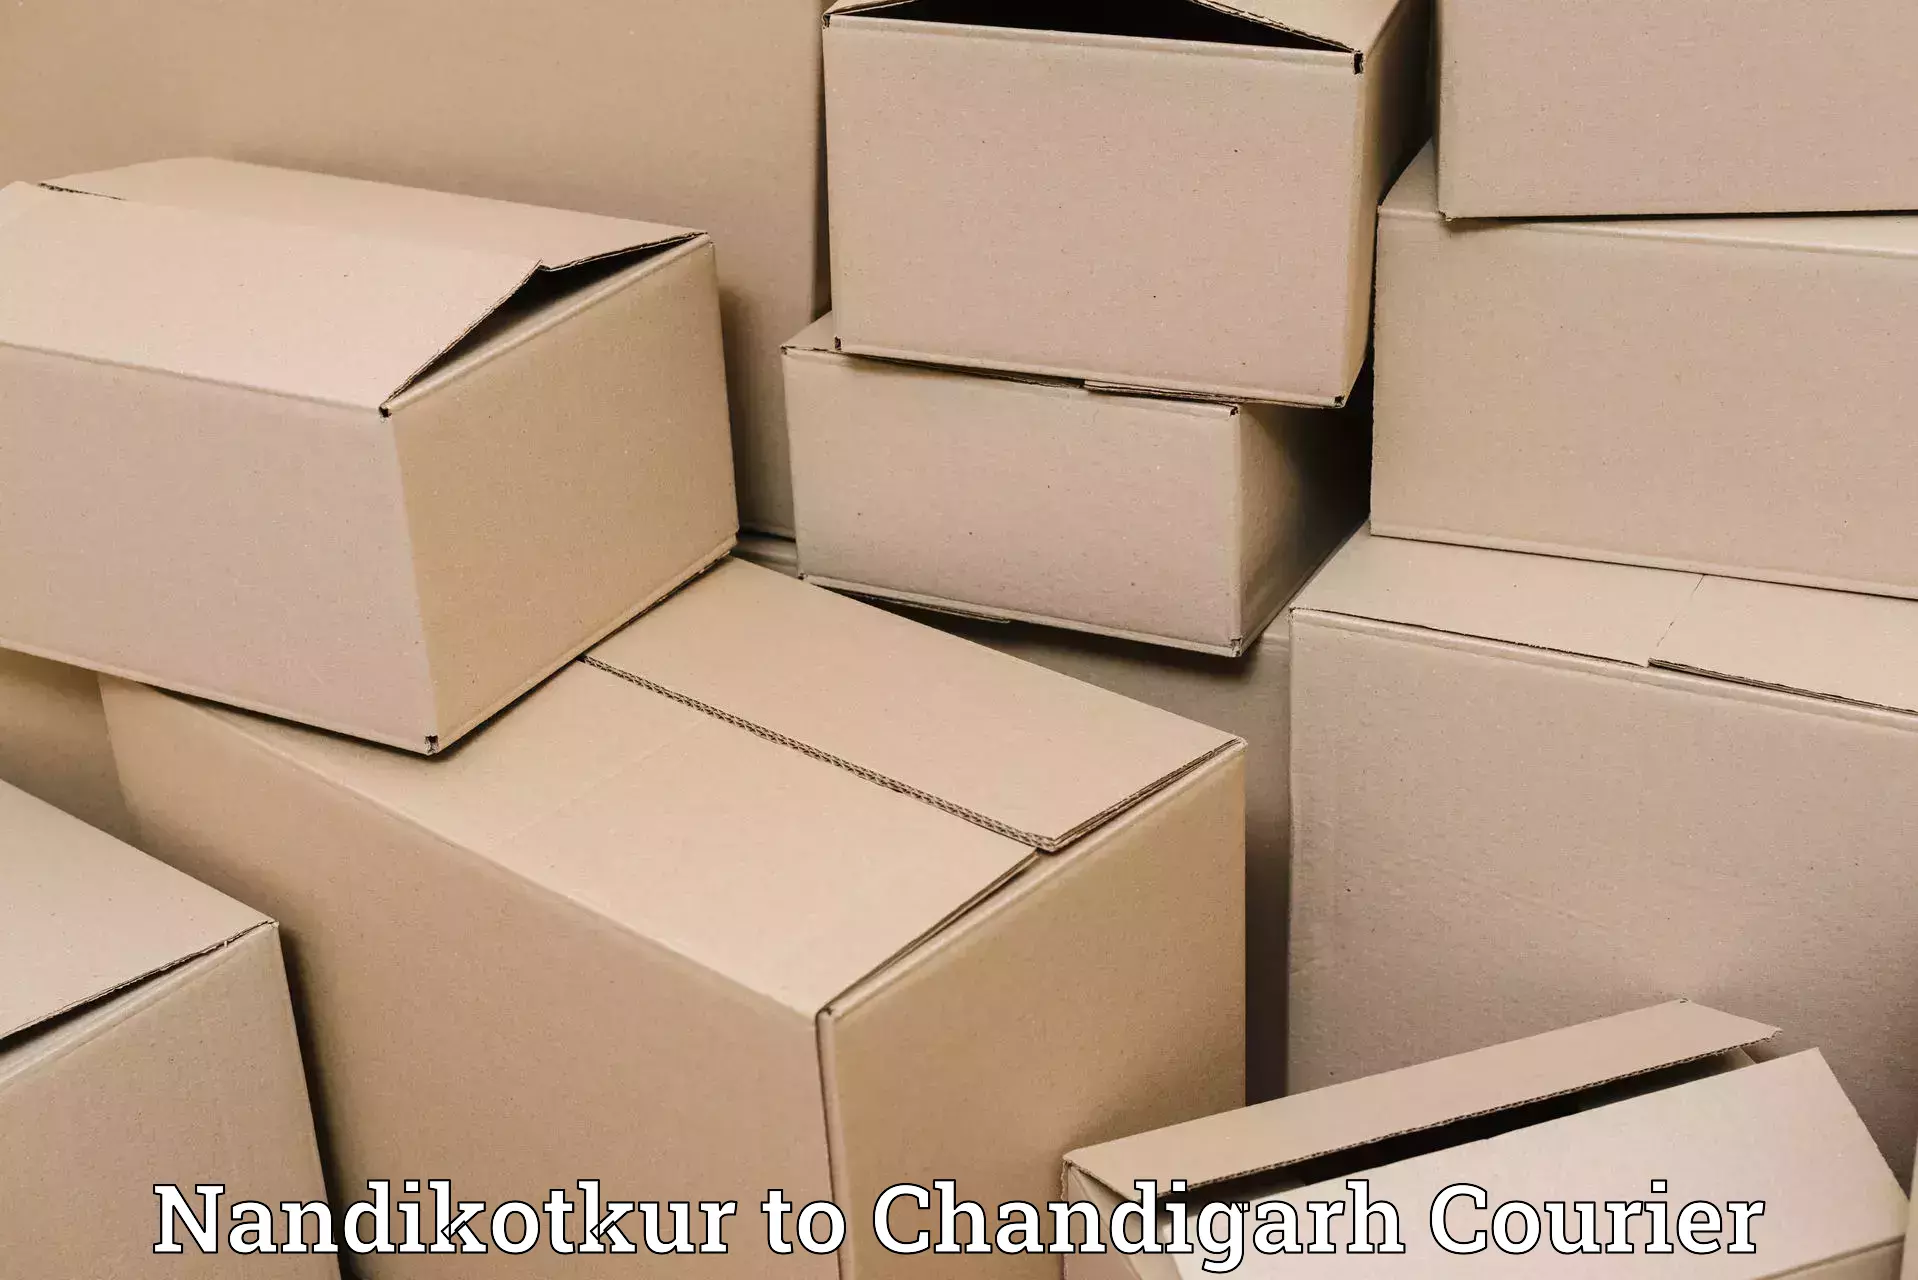 Next-day delivery options Nandikotkur to Chandigarh